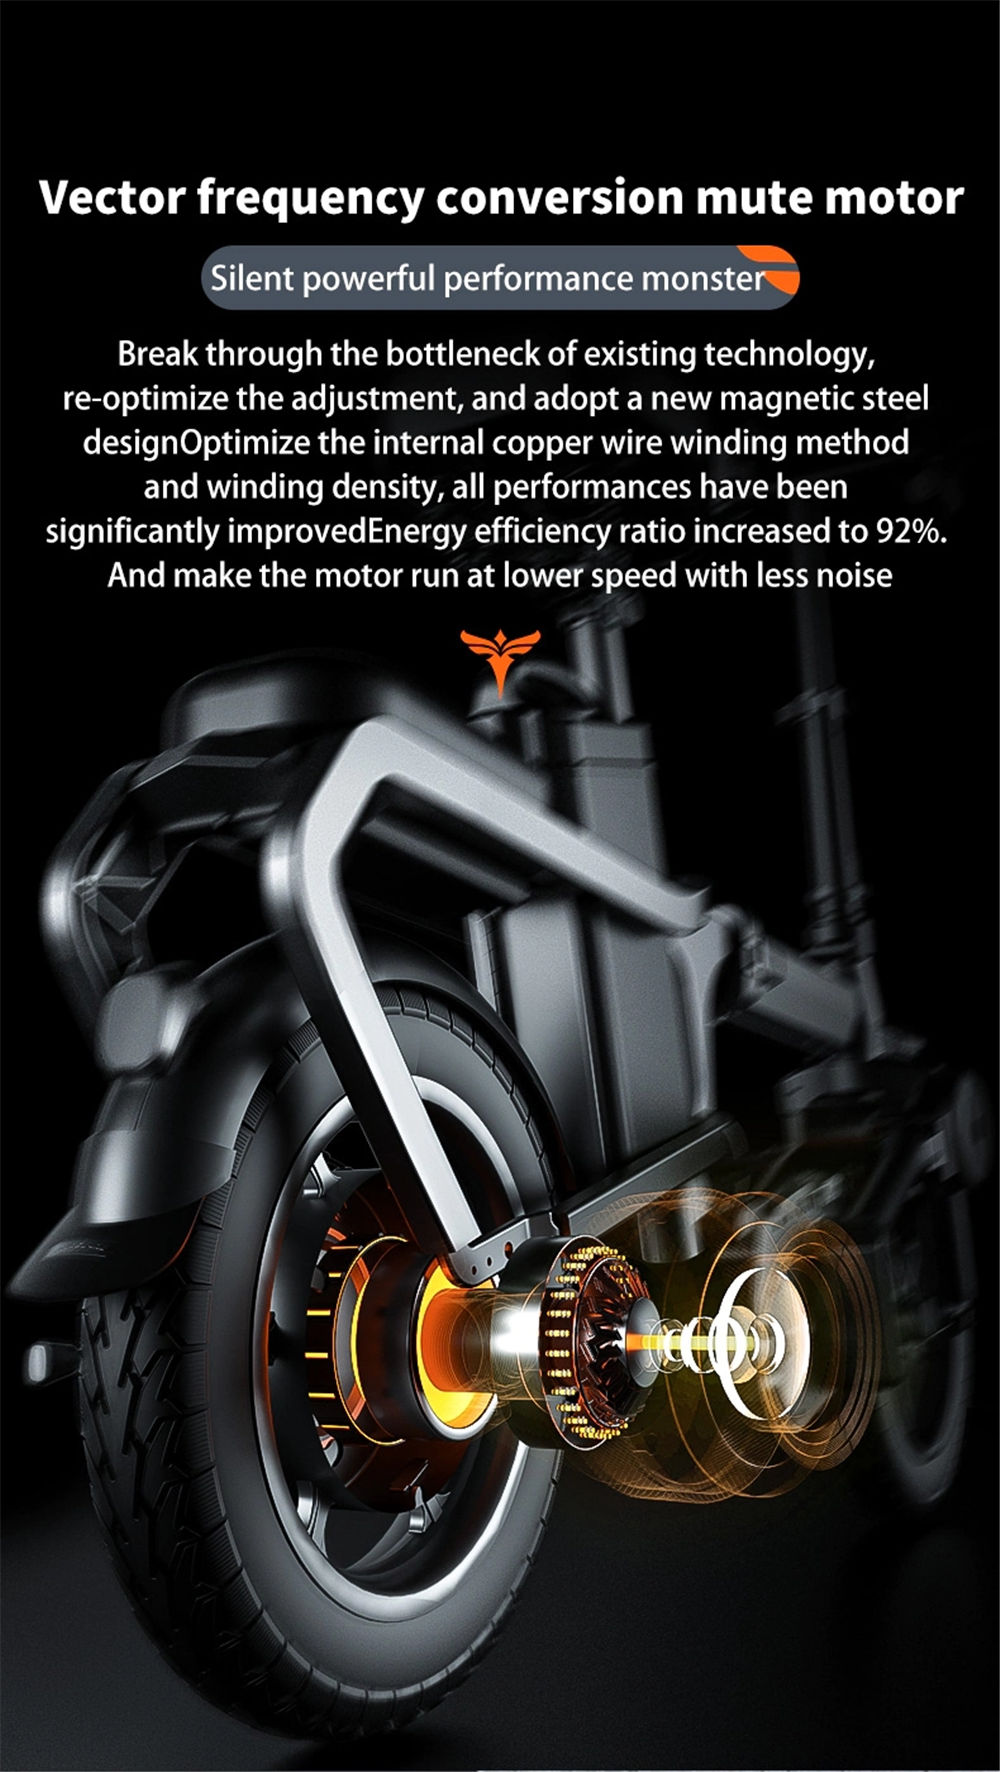 ENGWE X5S Chainless Folding 14 Inch Electric Bike 350W Motor 48V 15Ah Battery High Strength Aluminum Frame Maximum Speed 25 km/h - Grey